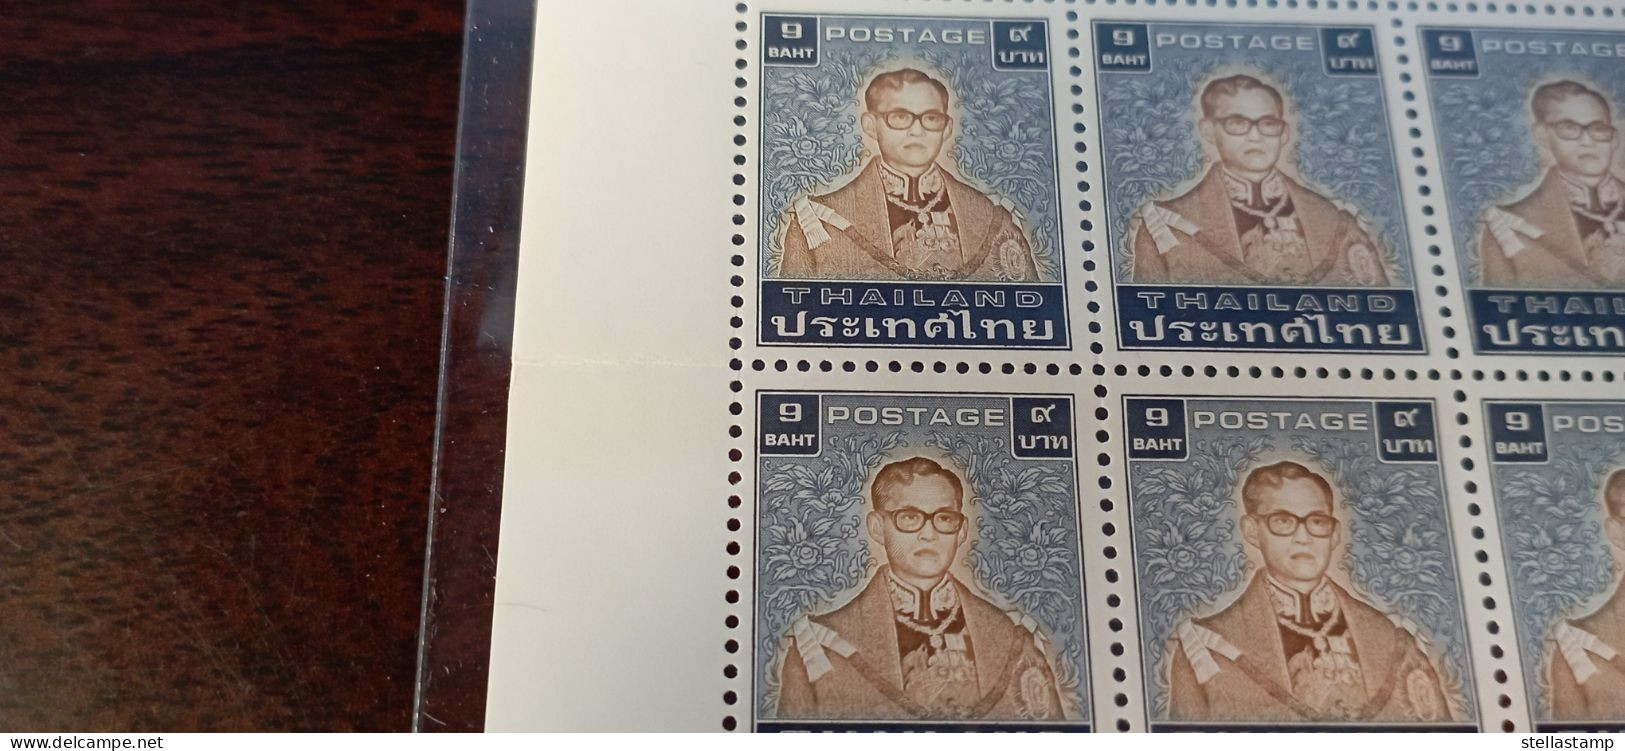 Thailand Stamp Definitive FS King Rama 9 7th Series 9 Baht (defect) - Thailand